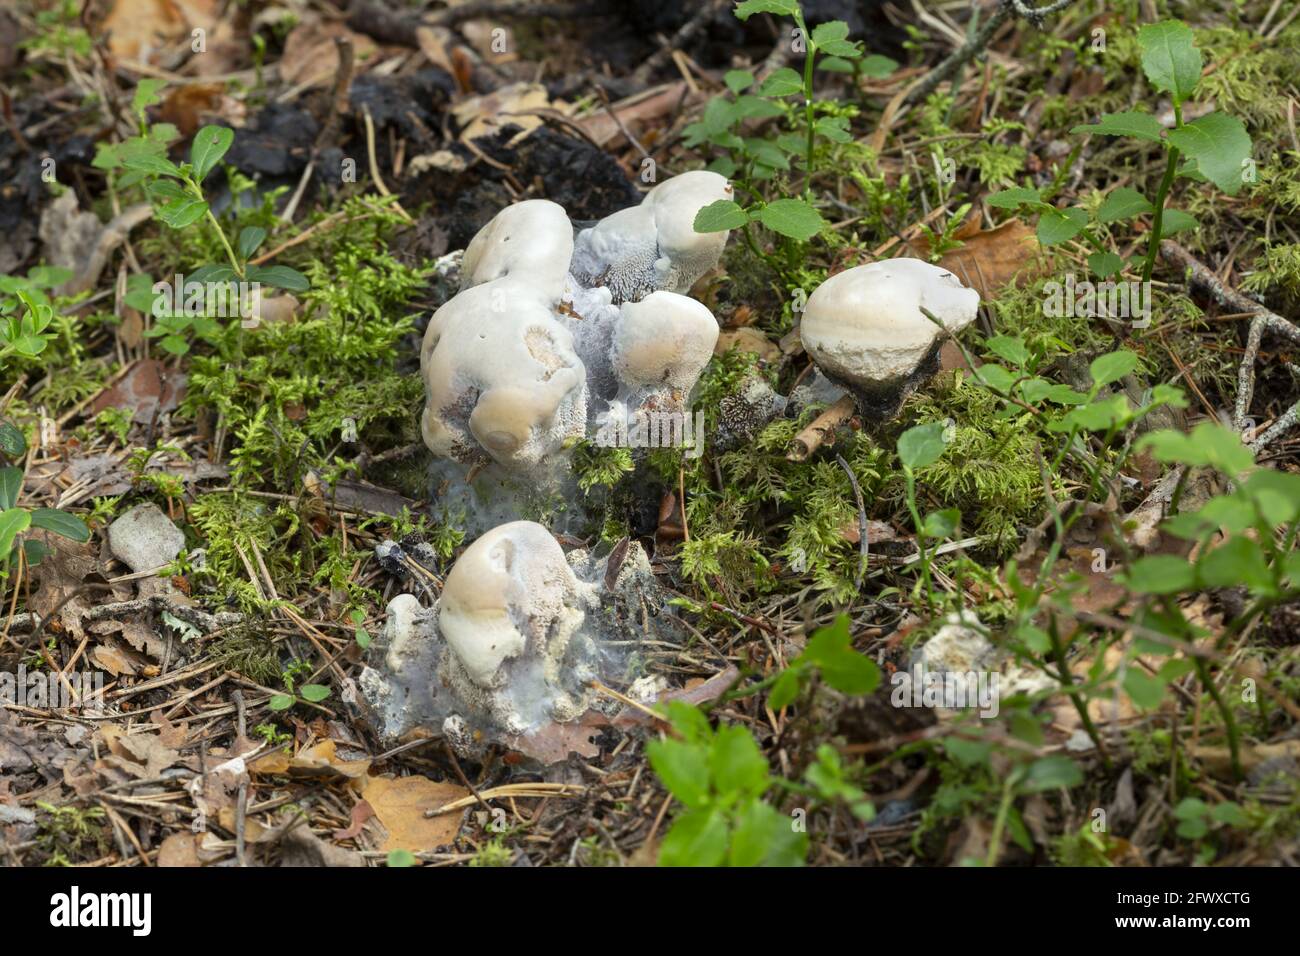 Hydnellum suaveolens mushrooms growing in natural environment Stock Photo